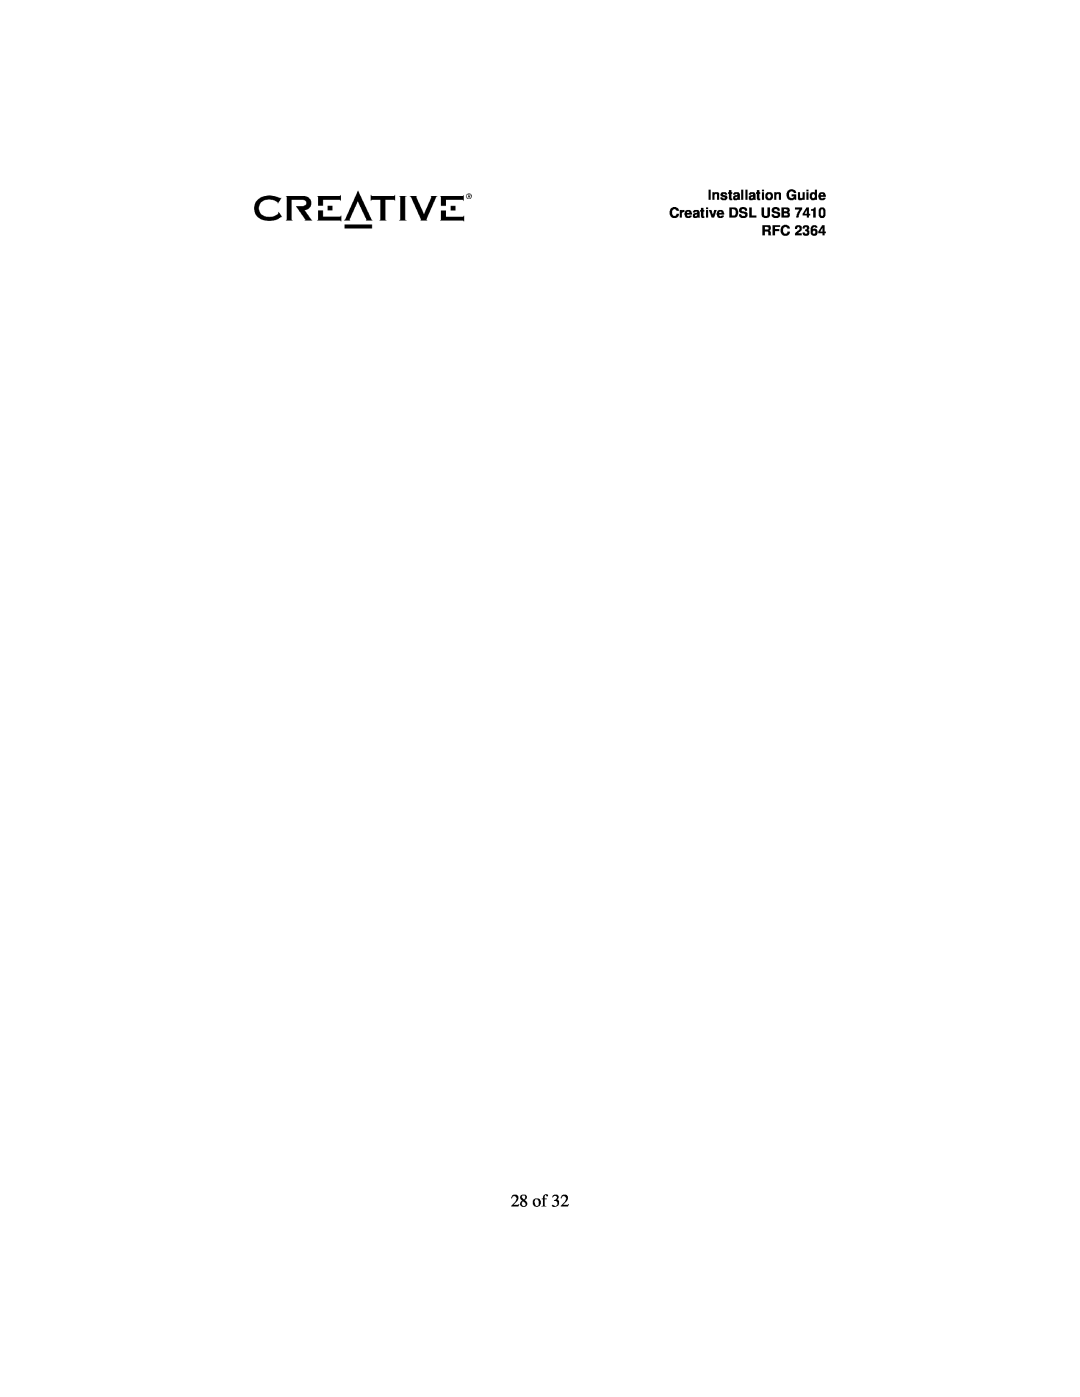 Creative RFC 2364 appendix 28 of, Installation Guide Creative DSL USB RFC 